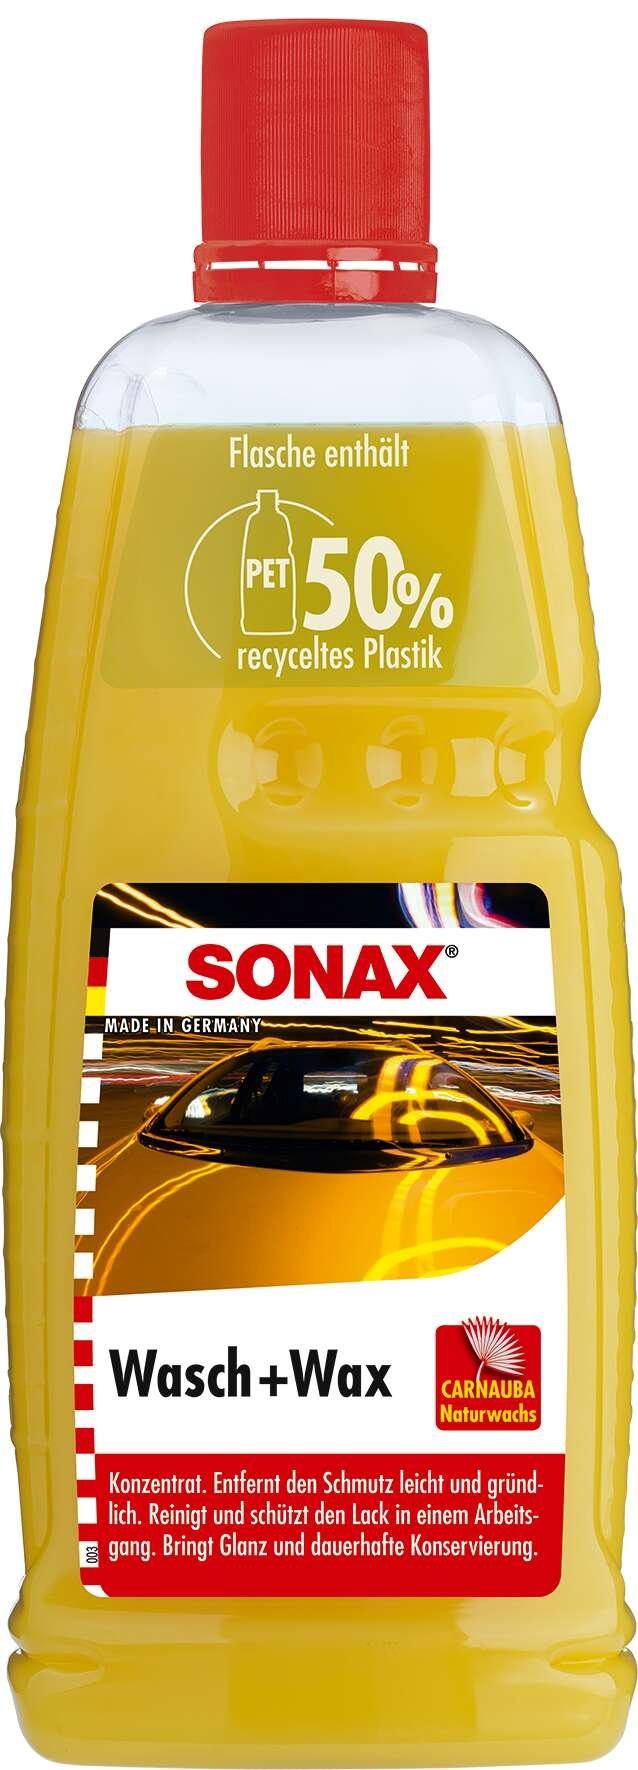 SONAX Wash + Wax 1000 ml bouteille PET